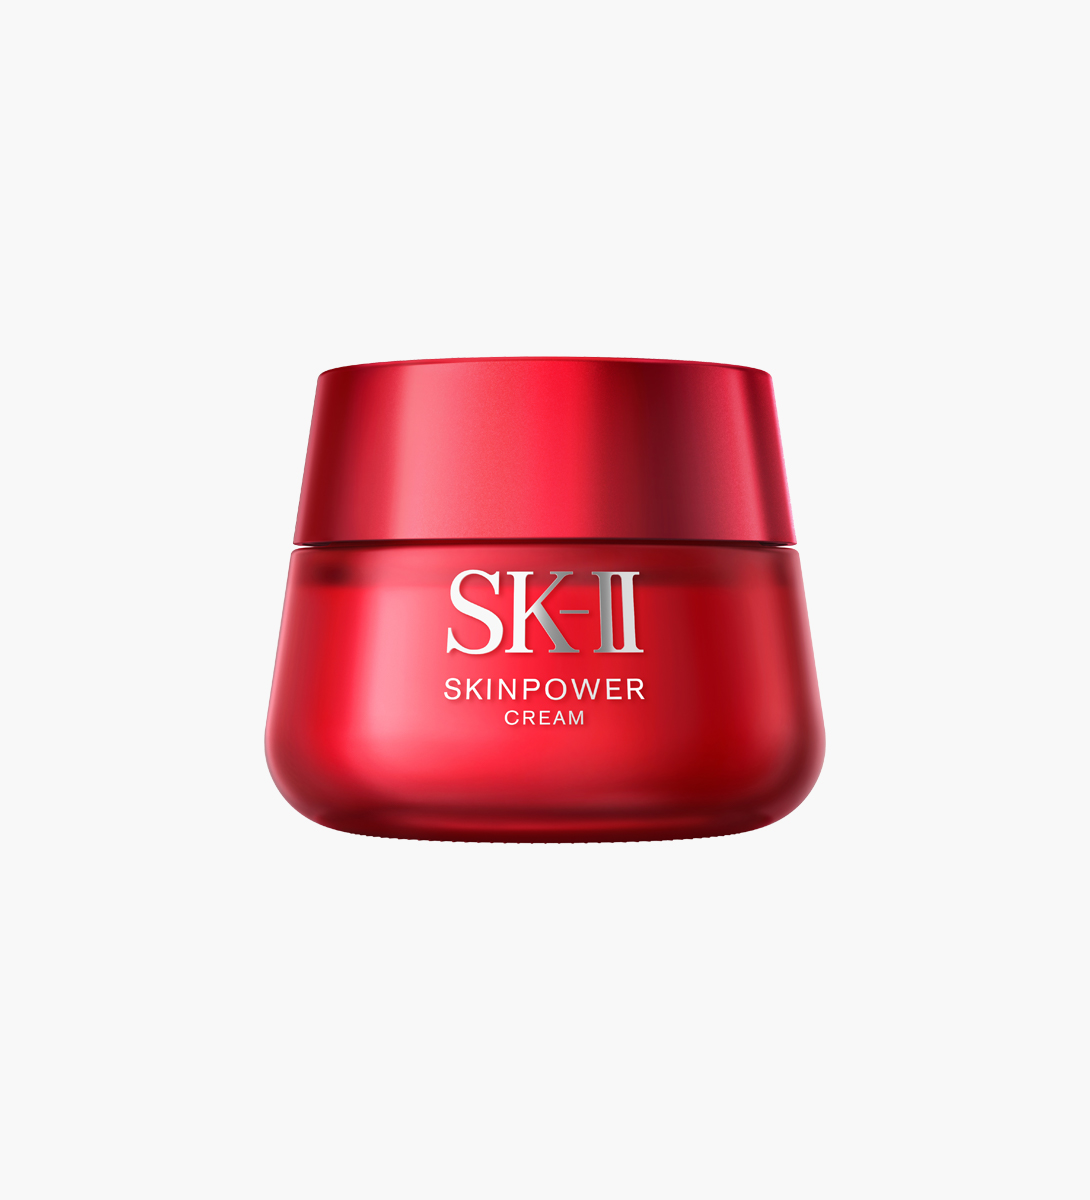 SKII-skinpower-cream-product